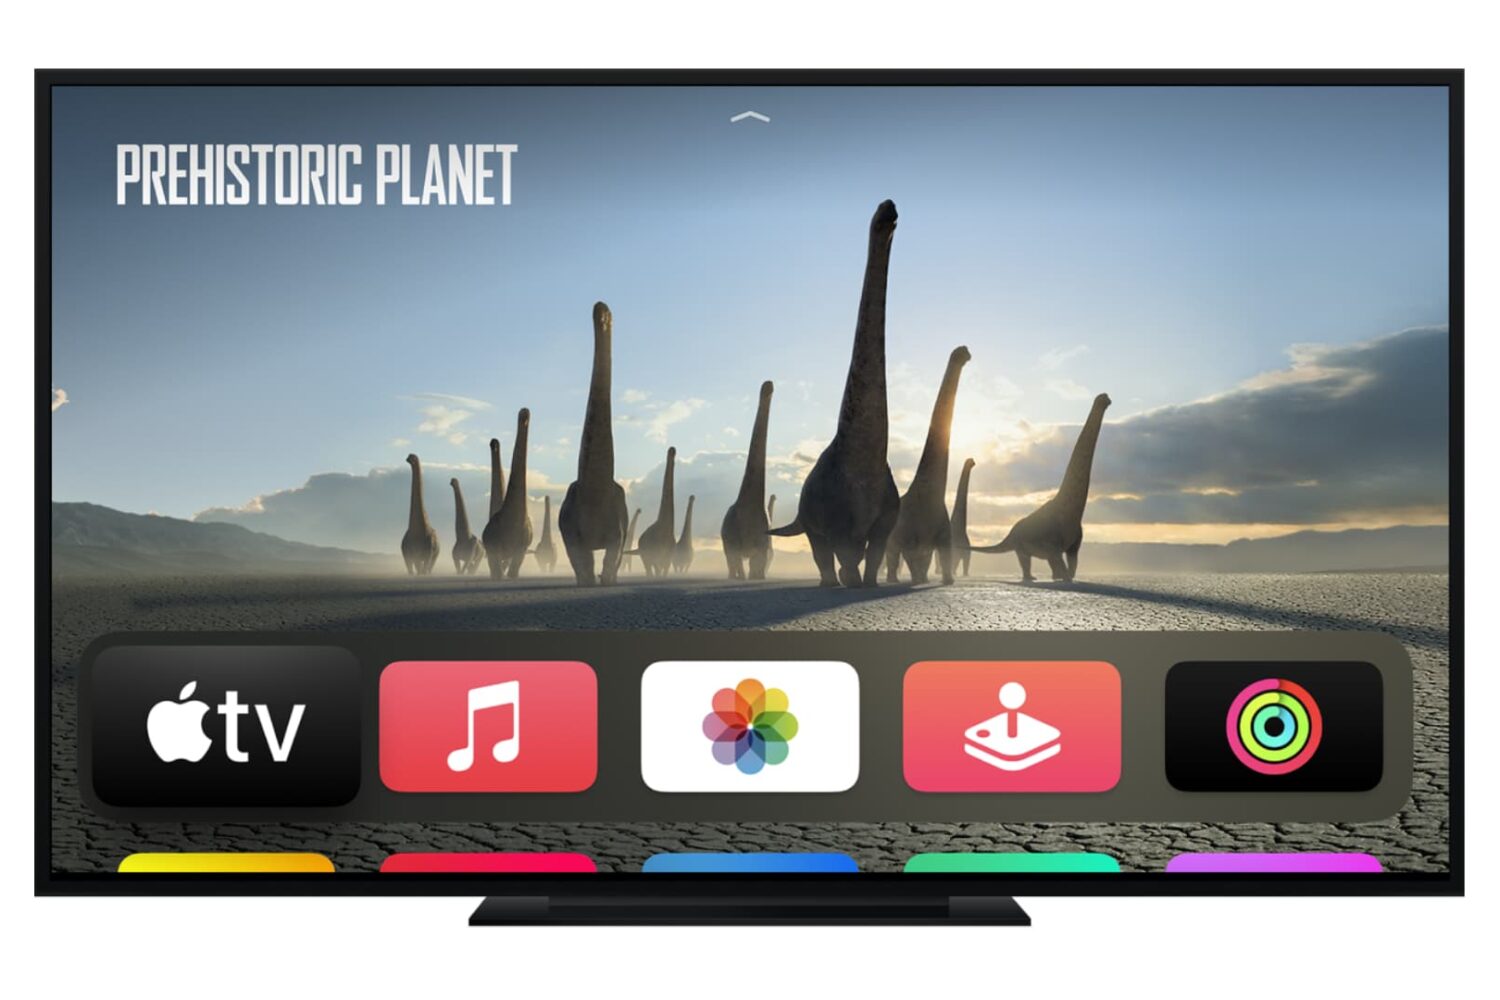 Apple TV Home Screen showcasing Prehistoric Planet